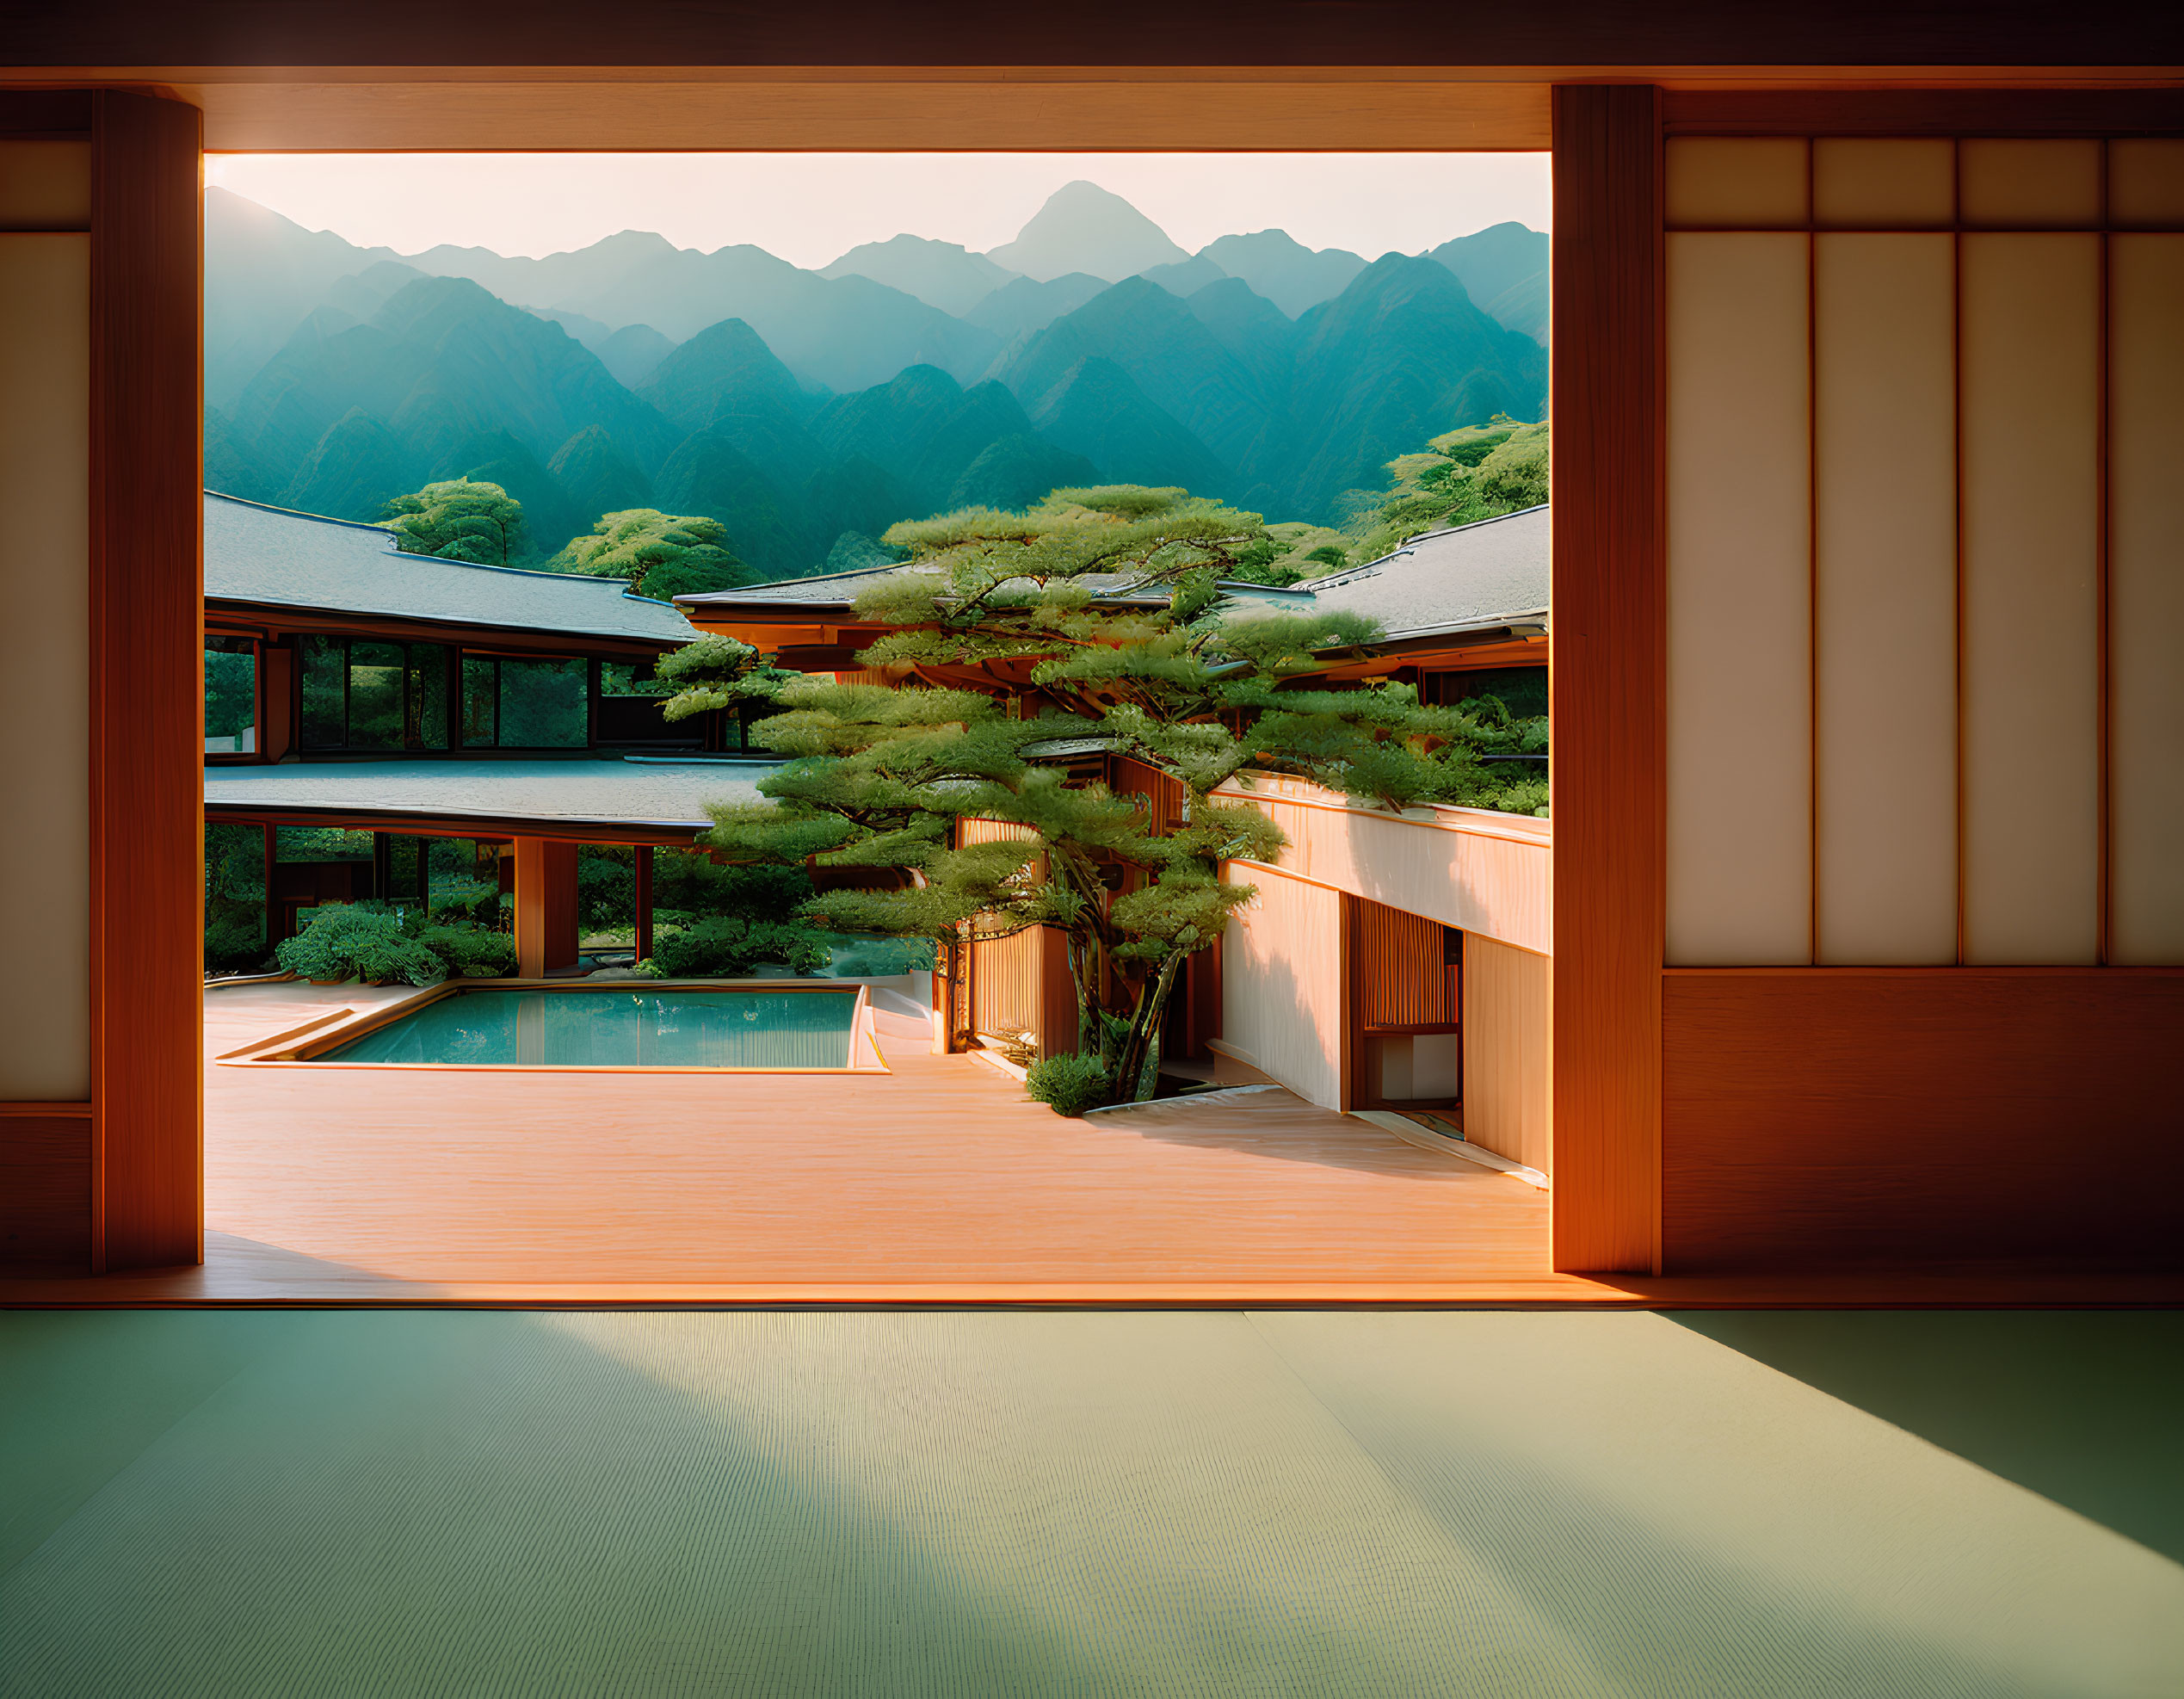 Japanese Architecture: Sliding Doors, Garden, Pool, Mountain Sunset